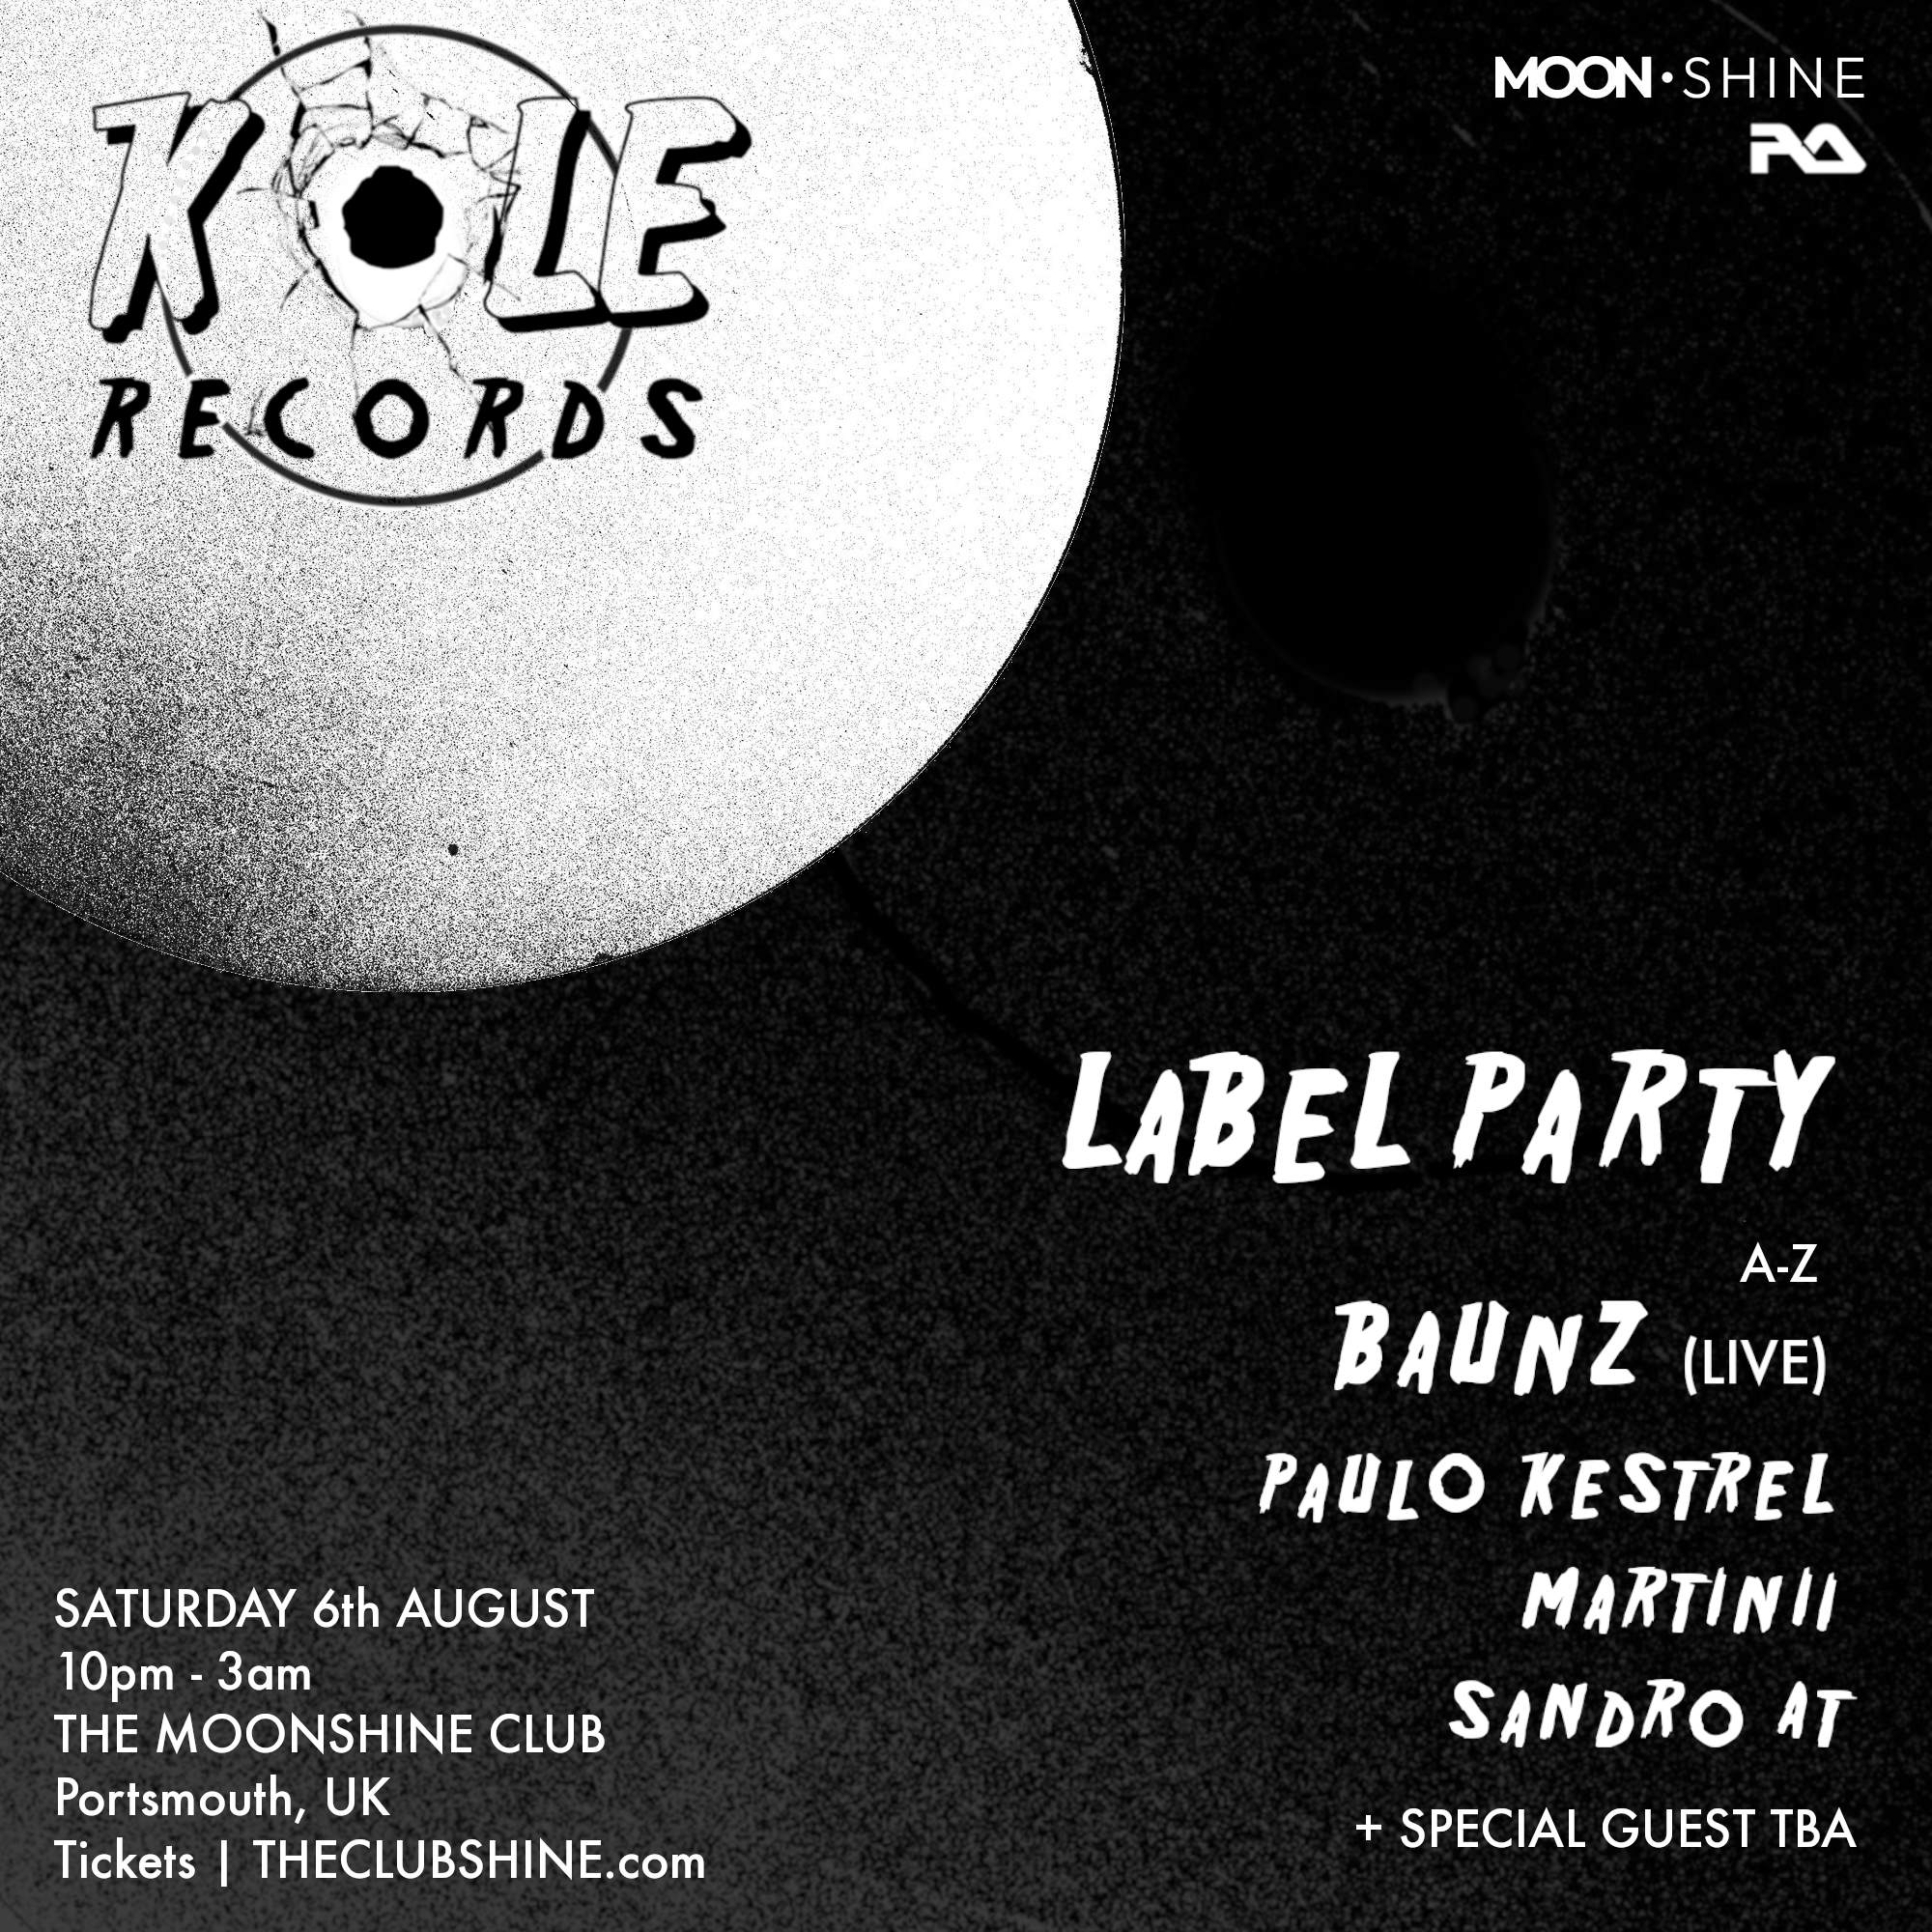 KOLE Records Label Party: Baunz, Paulo Kestrel + Special Guests - Flyer front